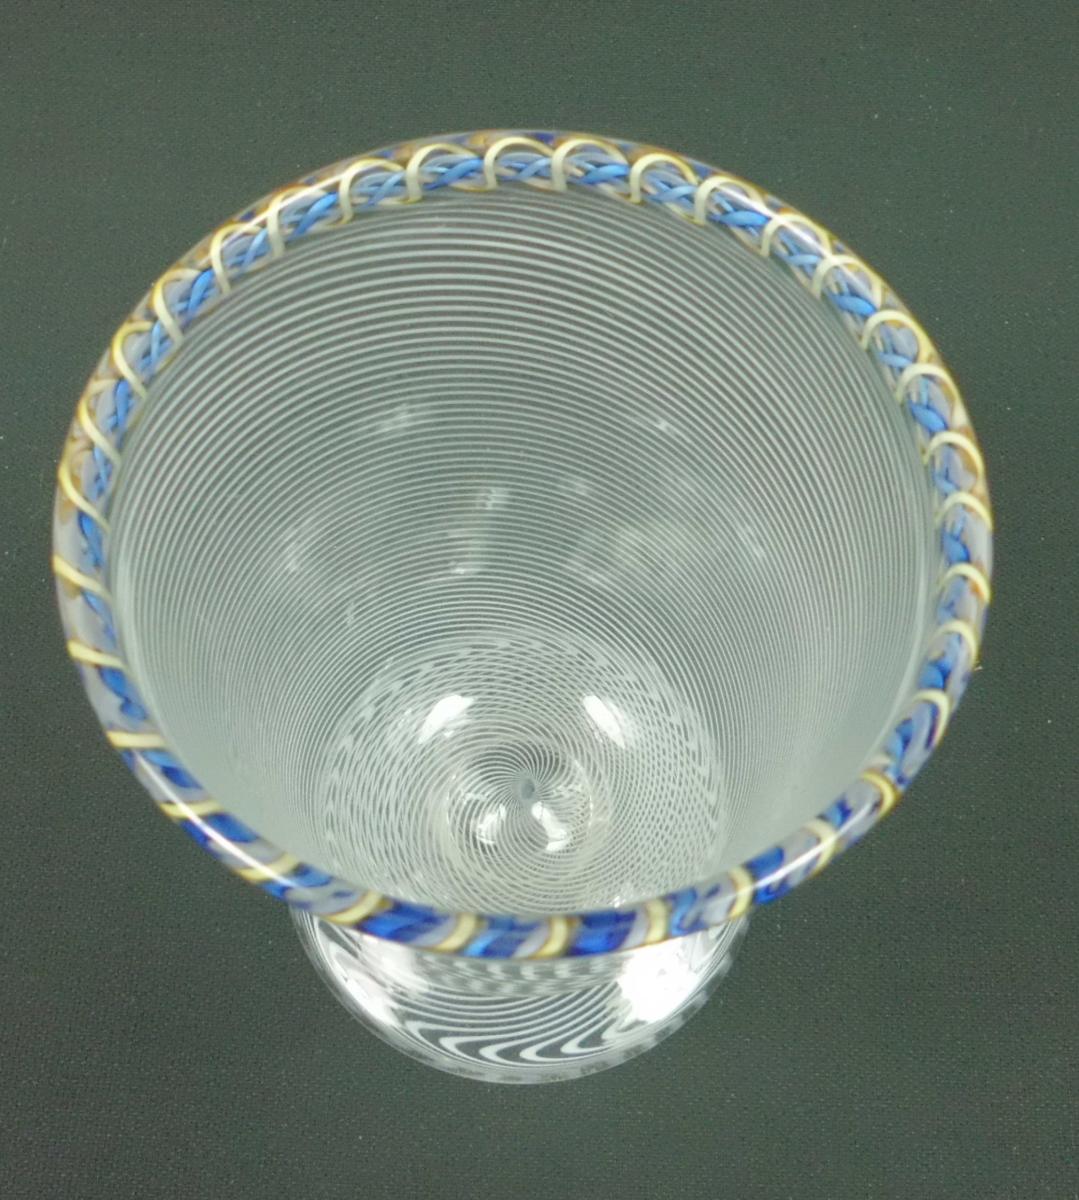 White latticinio glass beaker with blue and yellow glass cane rim, St. Louis, France circa 1860